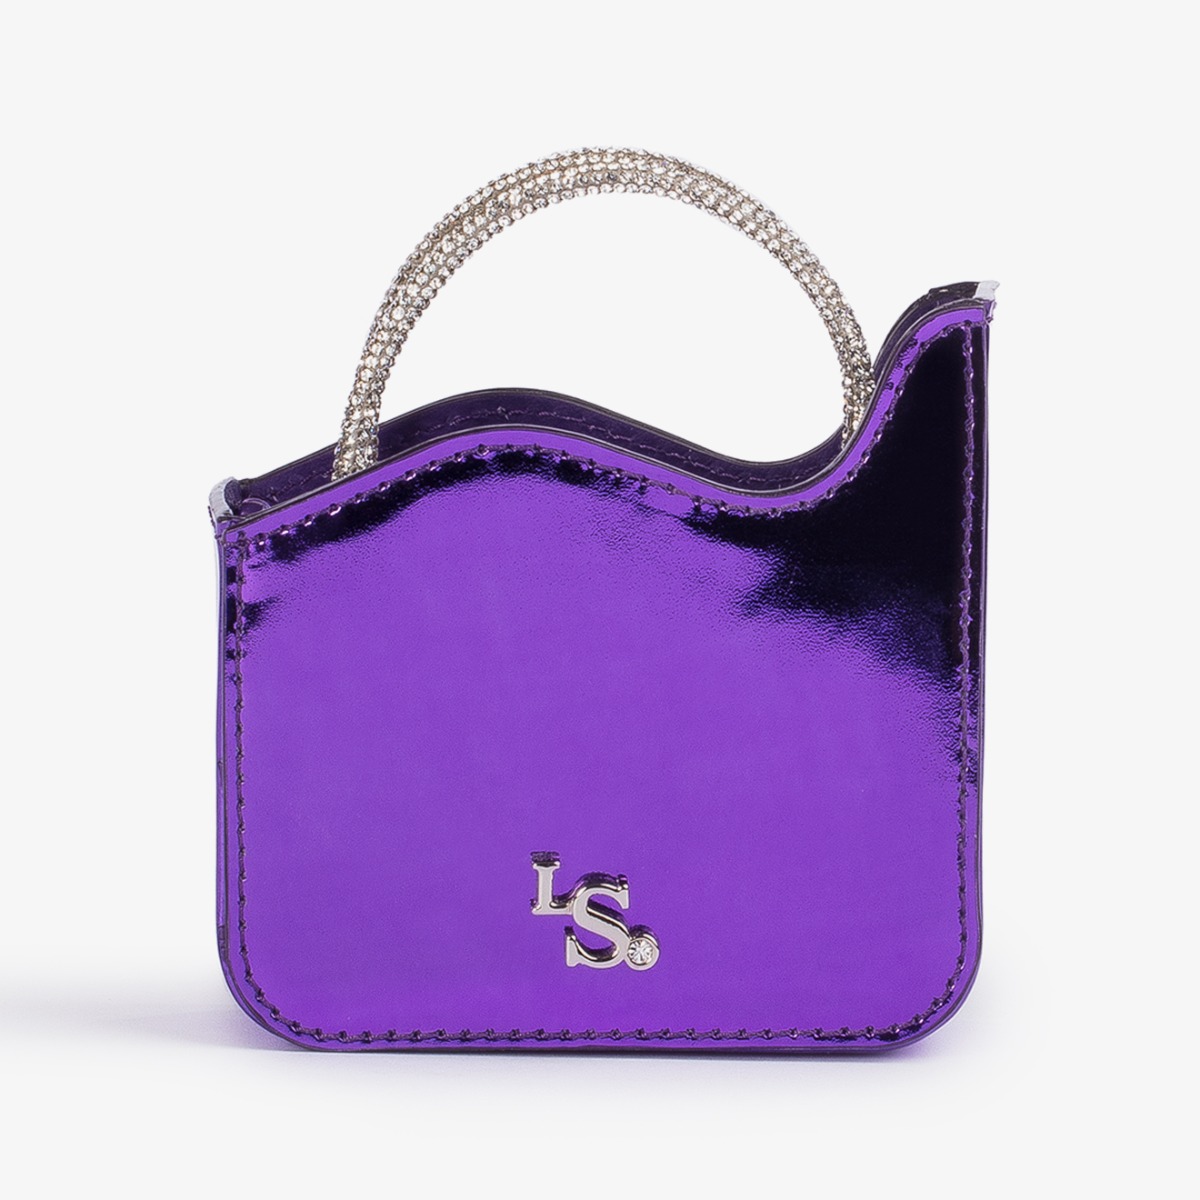 Kamala purple metallic micro bag with Crystals - Le Silla